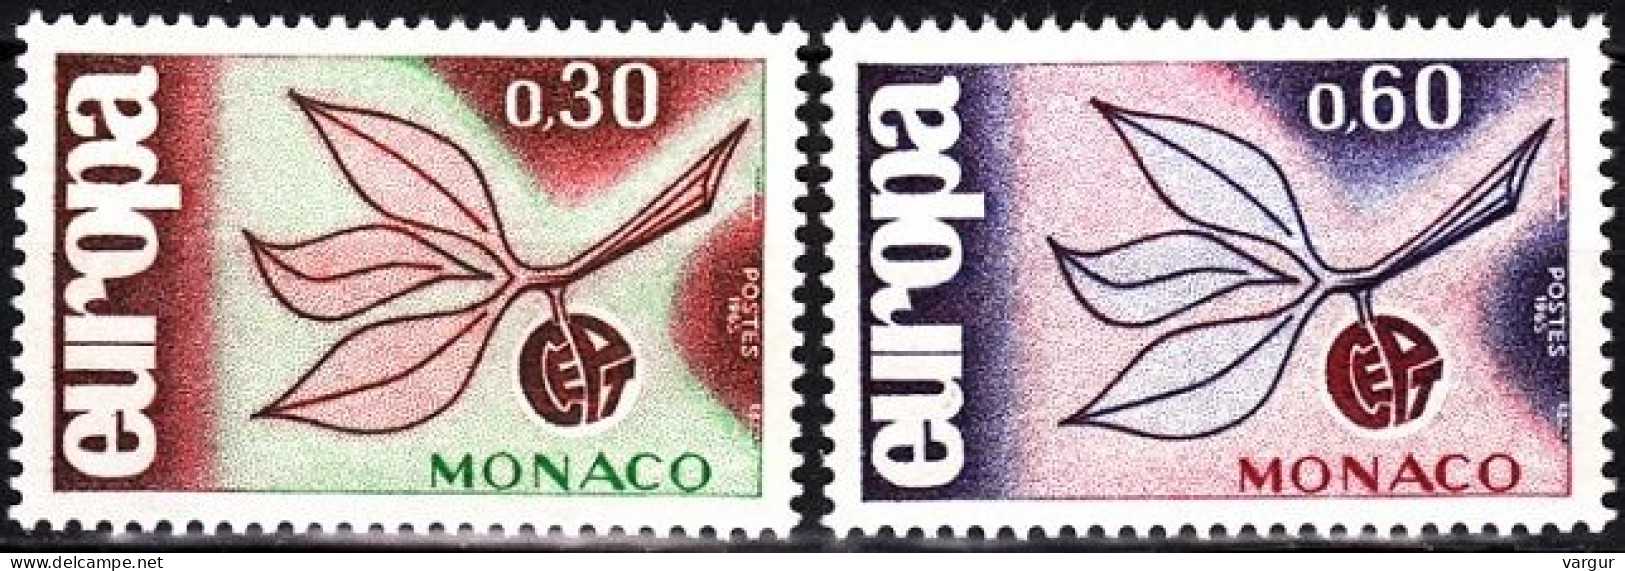 MONACO 1965 EUROPA. Complete Set, MNH - 1965